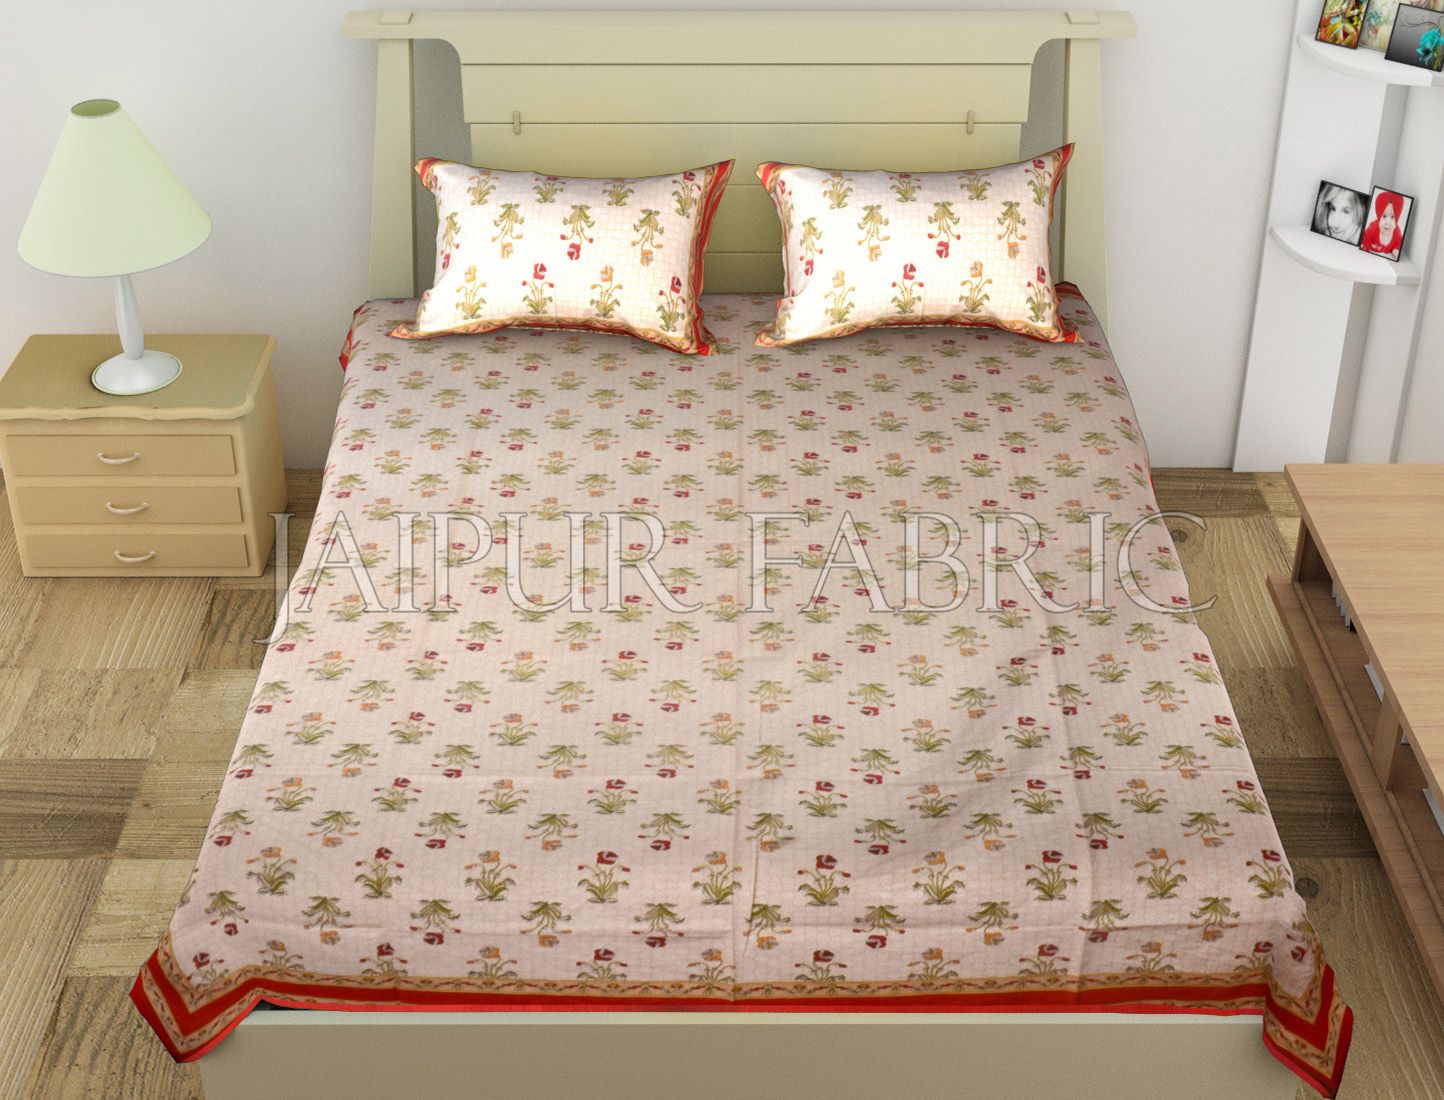 Red Border Trellis Base Floral Printed Cotton Single Bed Sheet